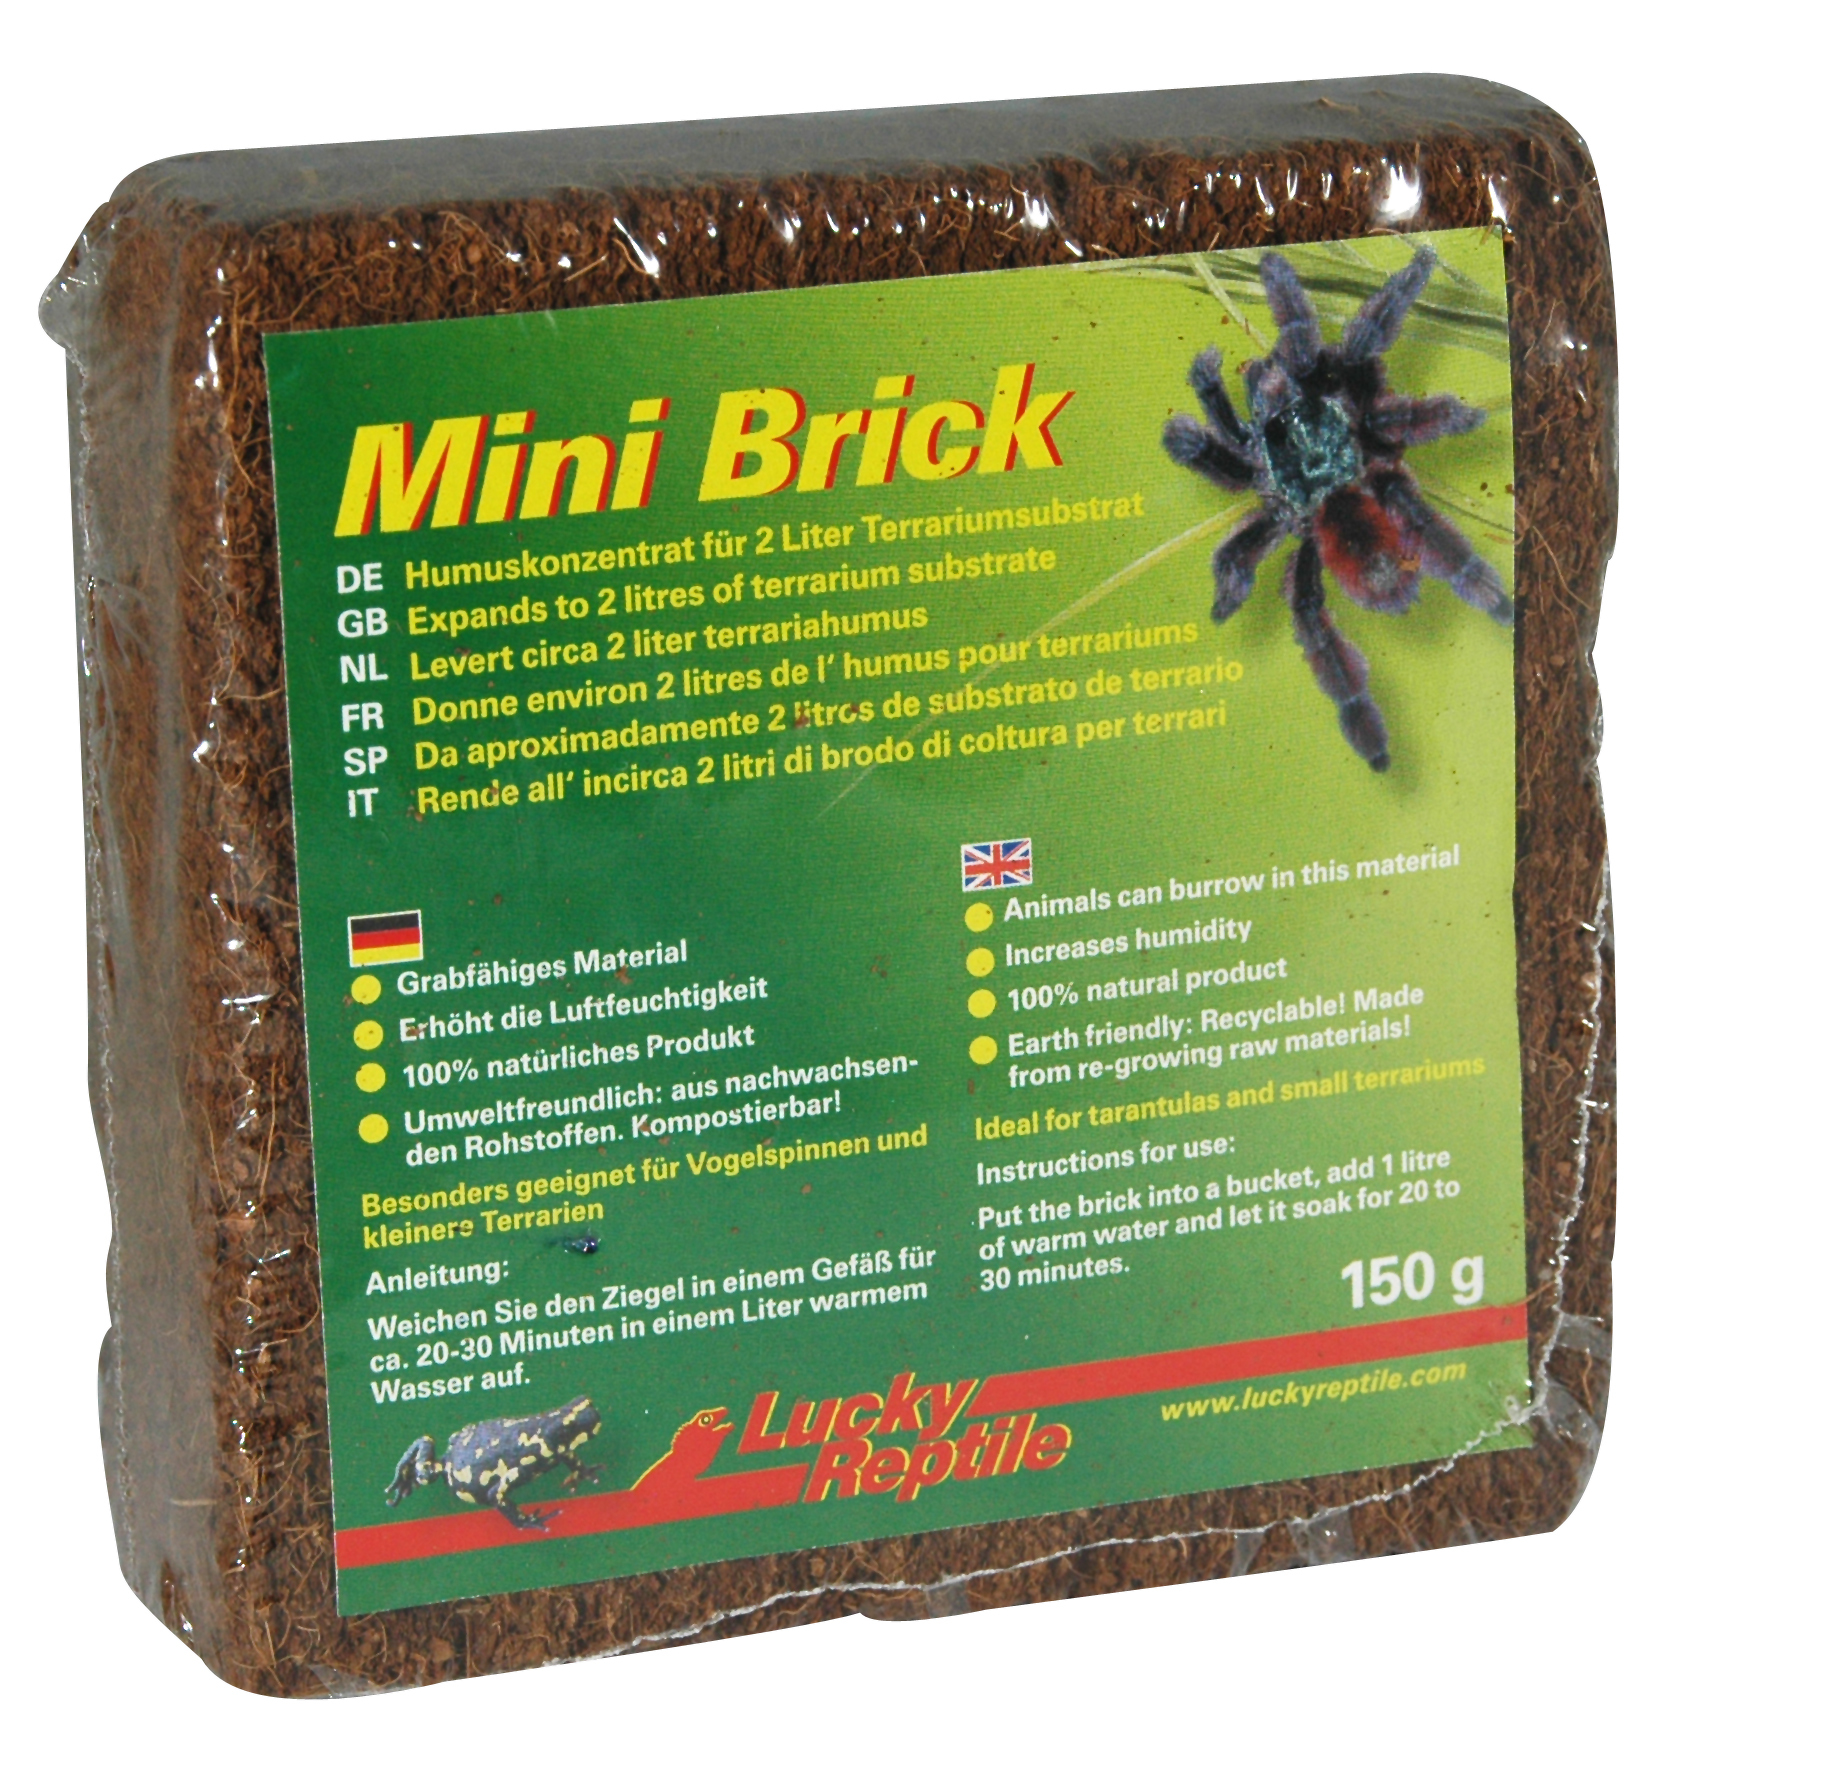 Import-Export Peter Hoch GmbH Mini Brick 150 g